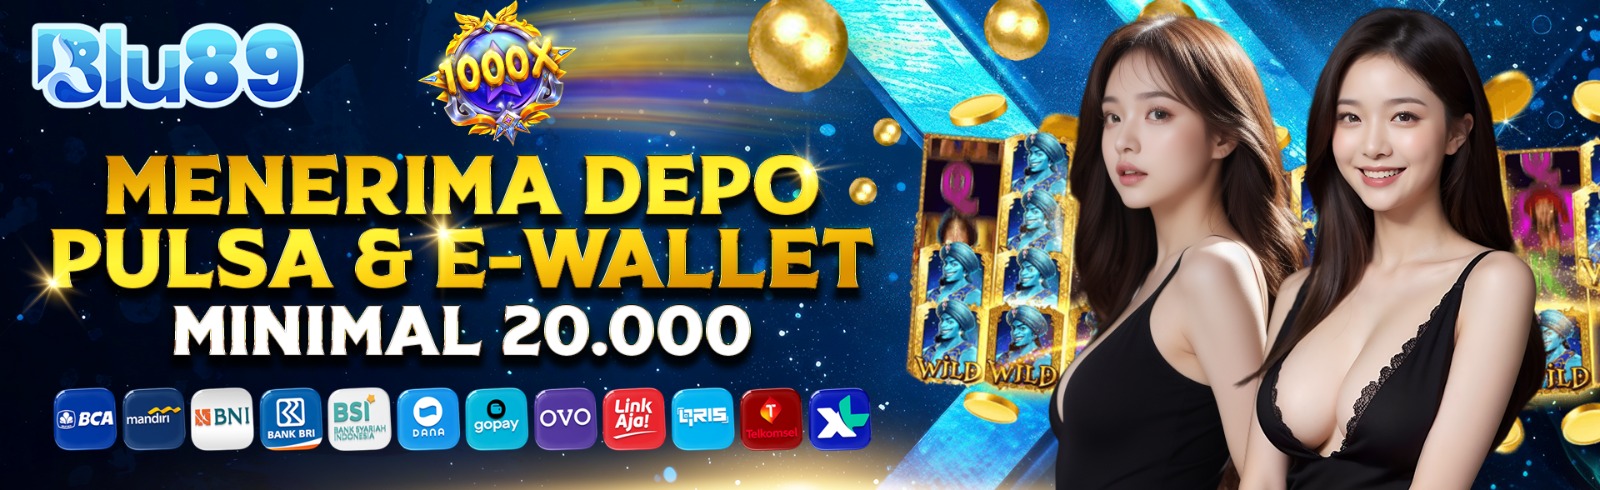 Deposit Ewallet Blu89